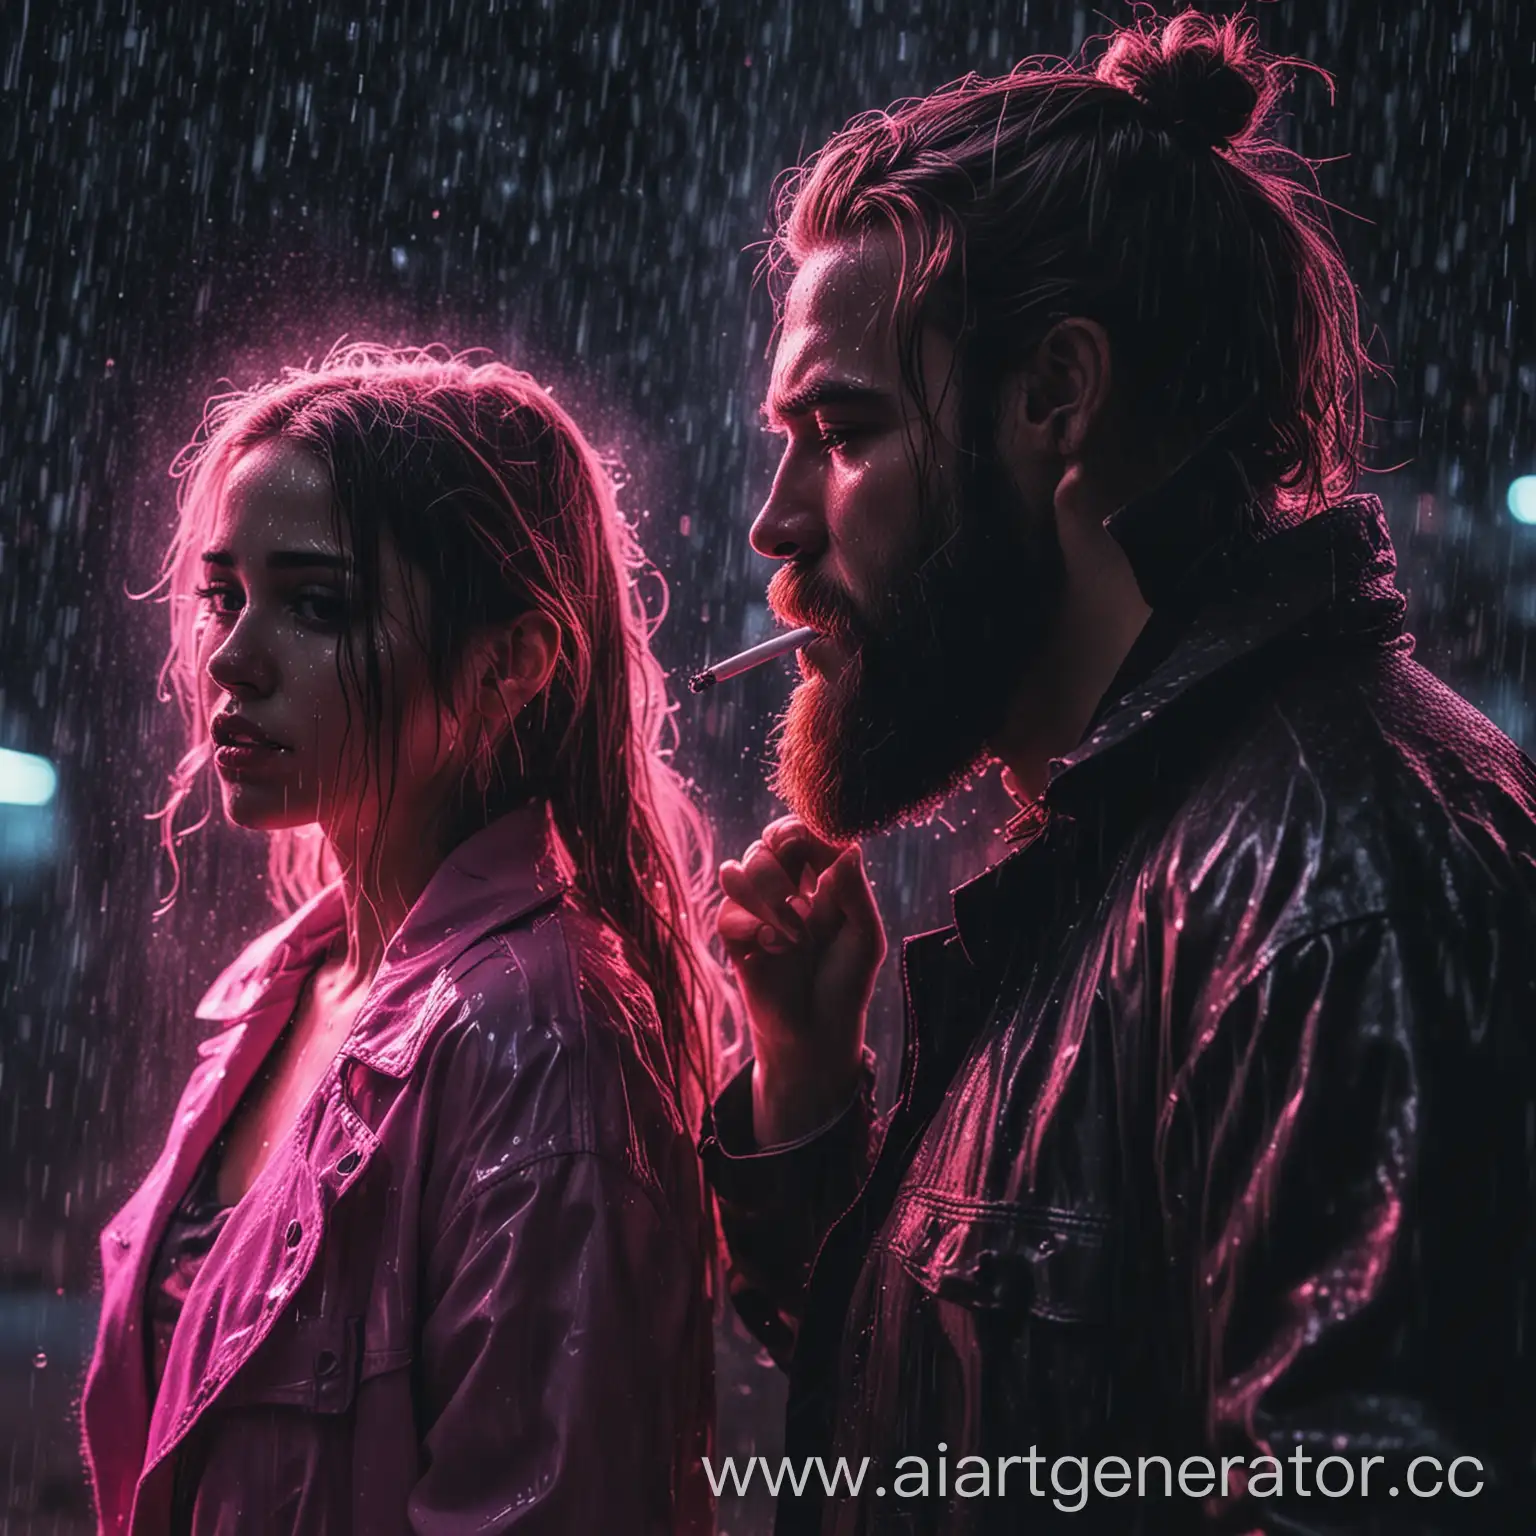 Neon-Style-Rain-Scene-Bearded-Man-Smoking-Back-to-Back-with-Crying-Girl